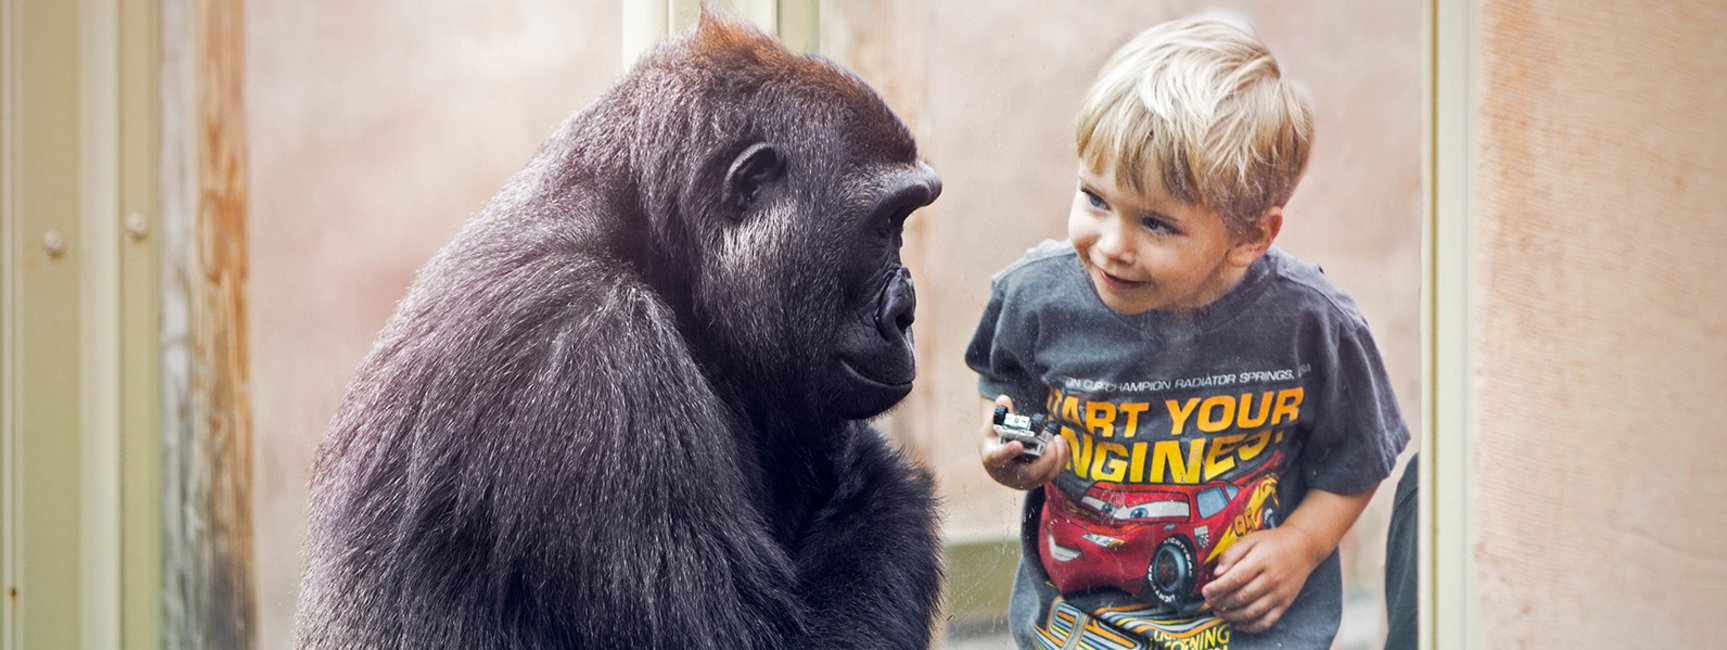 Child looking at a gorilla at the Calgary Zoo.